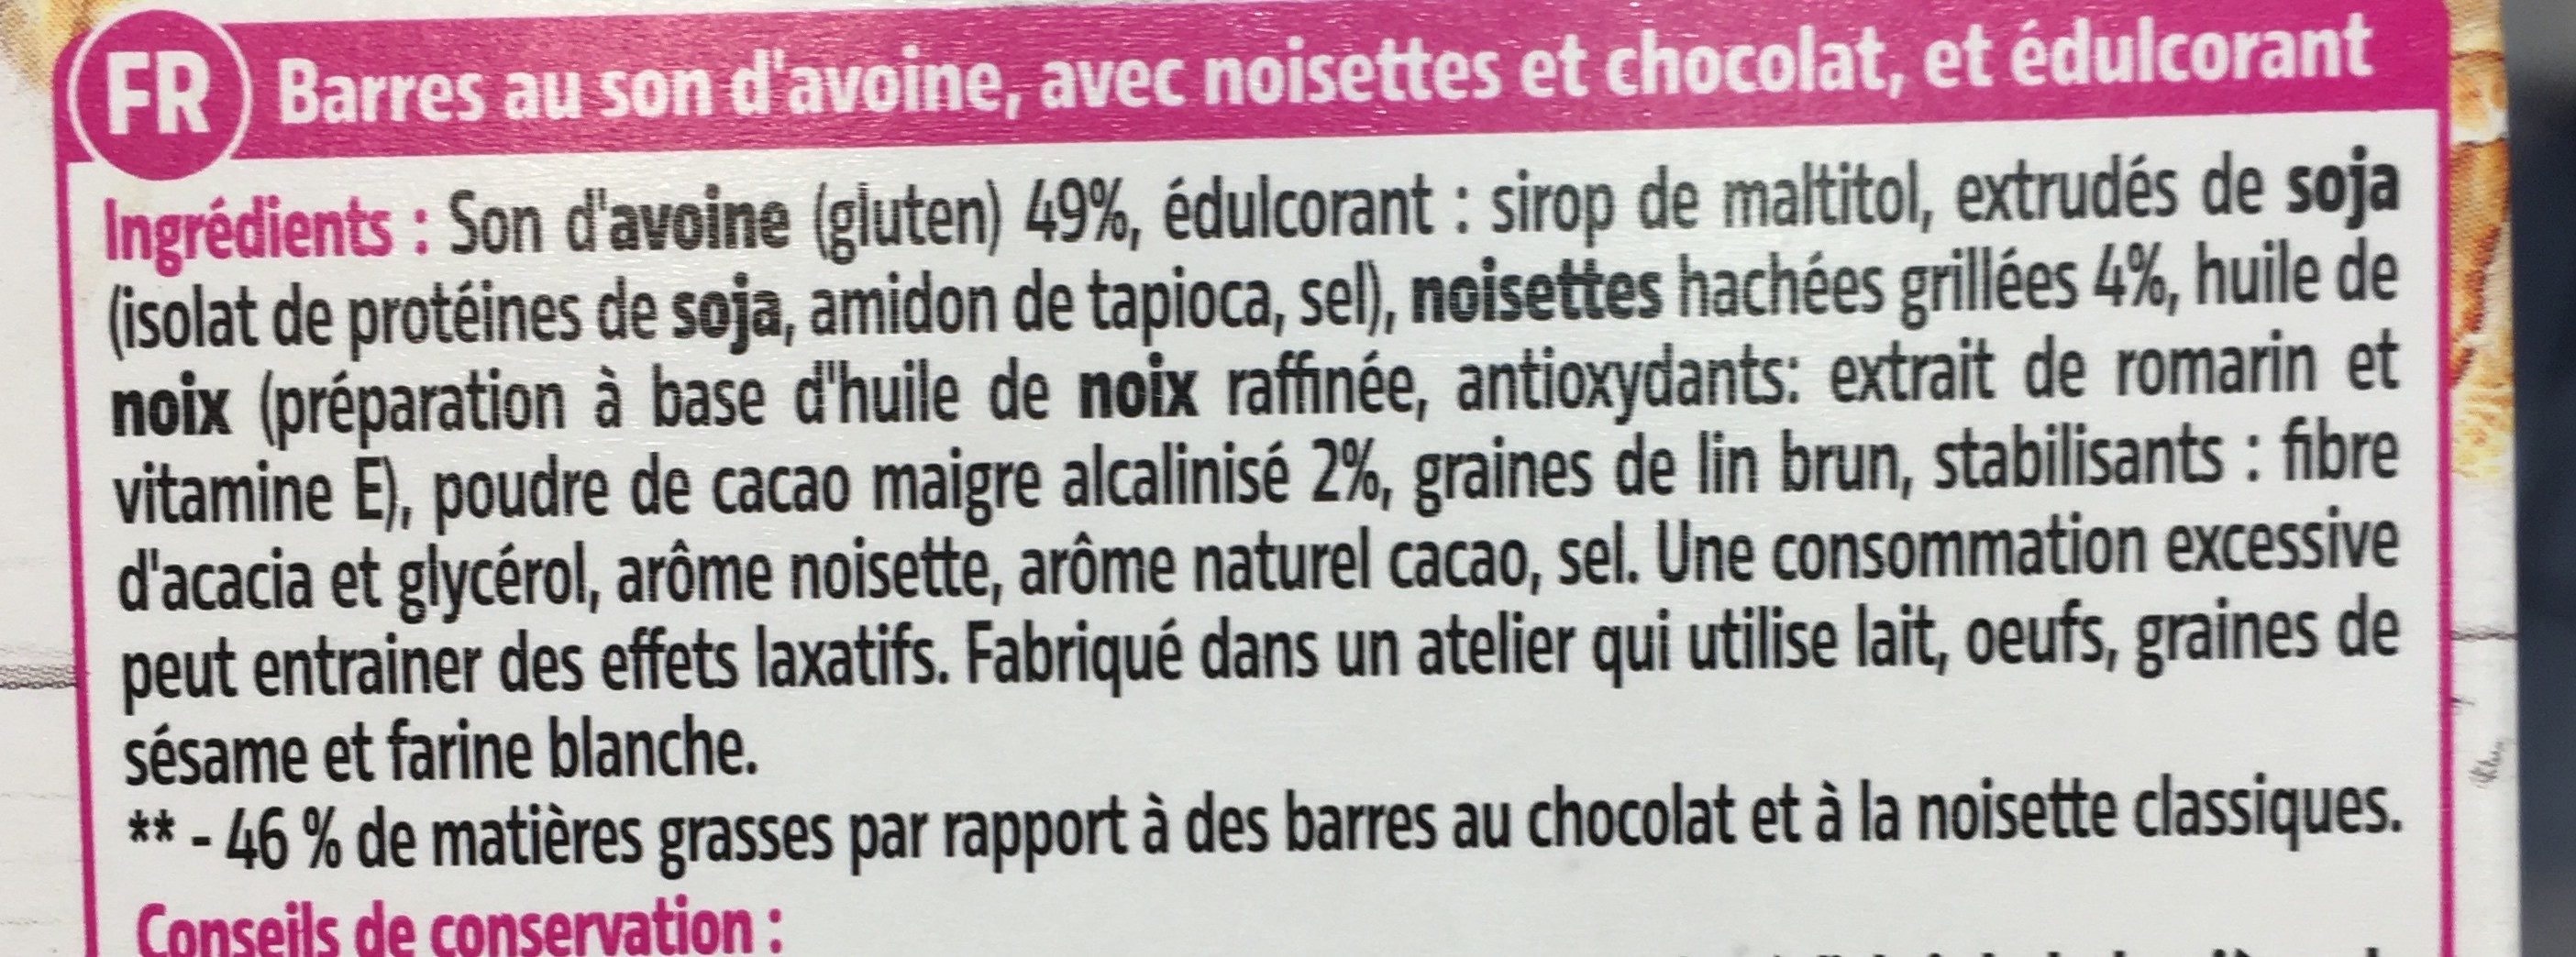 Dukan barres chocolat et noisettes - Ingrediënten - fr